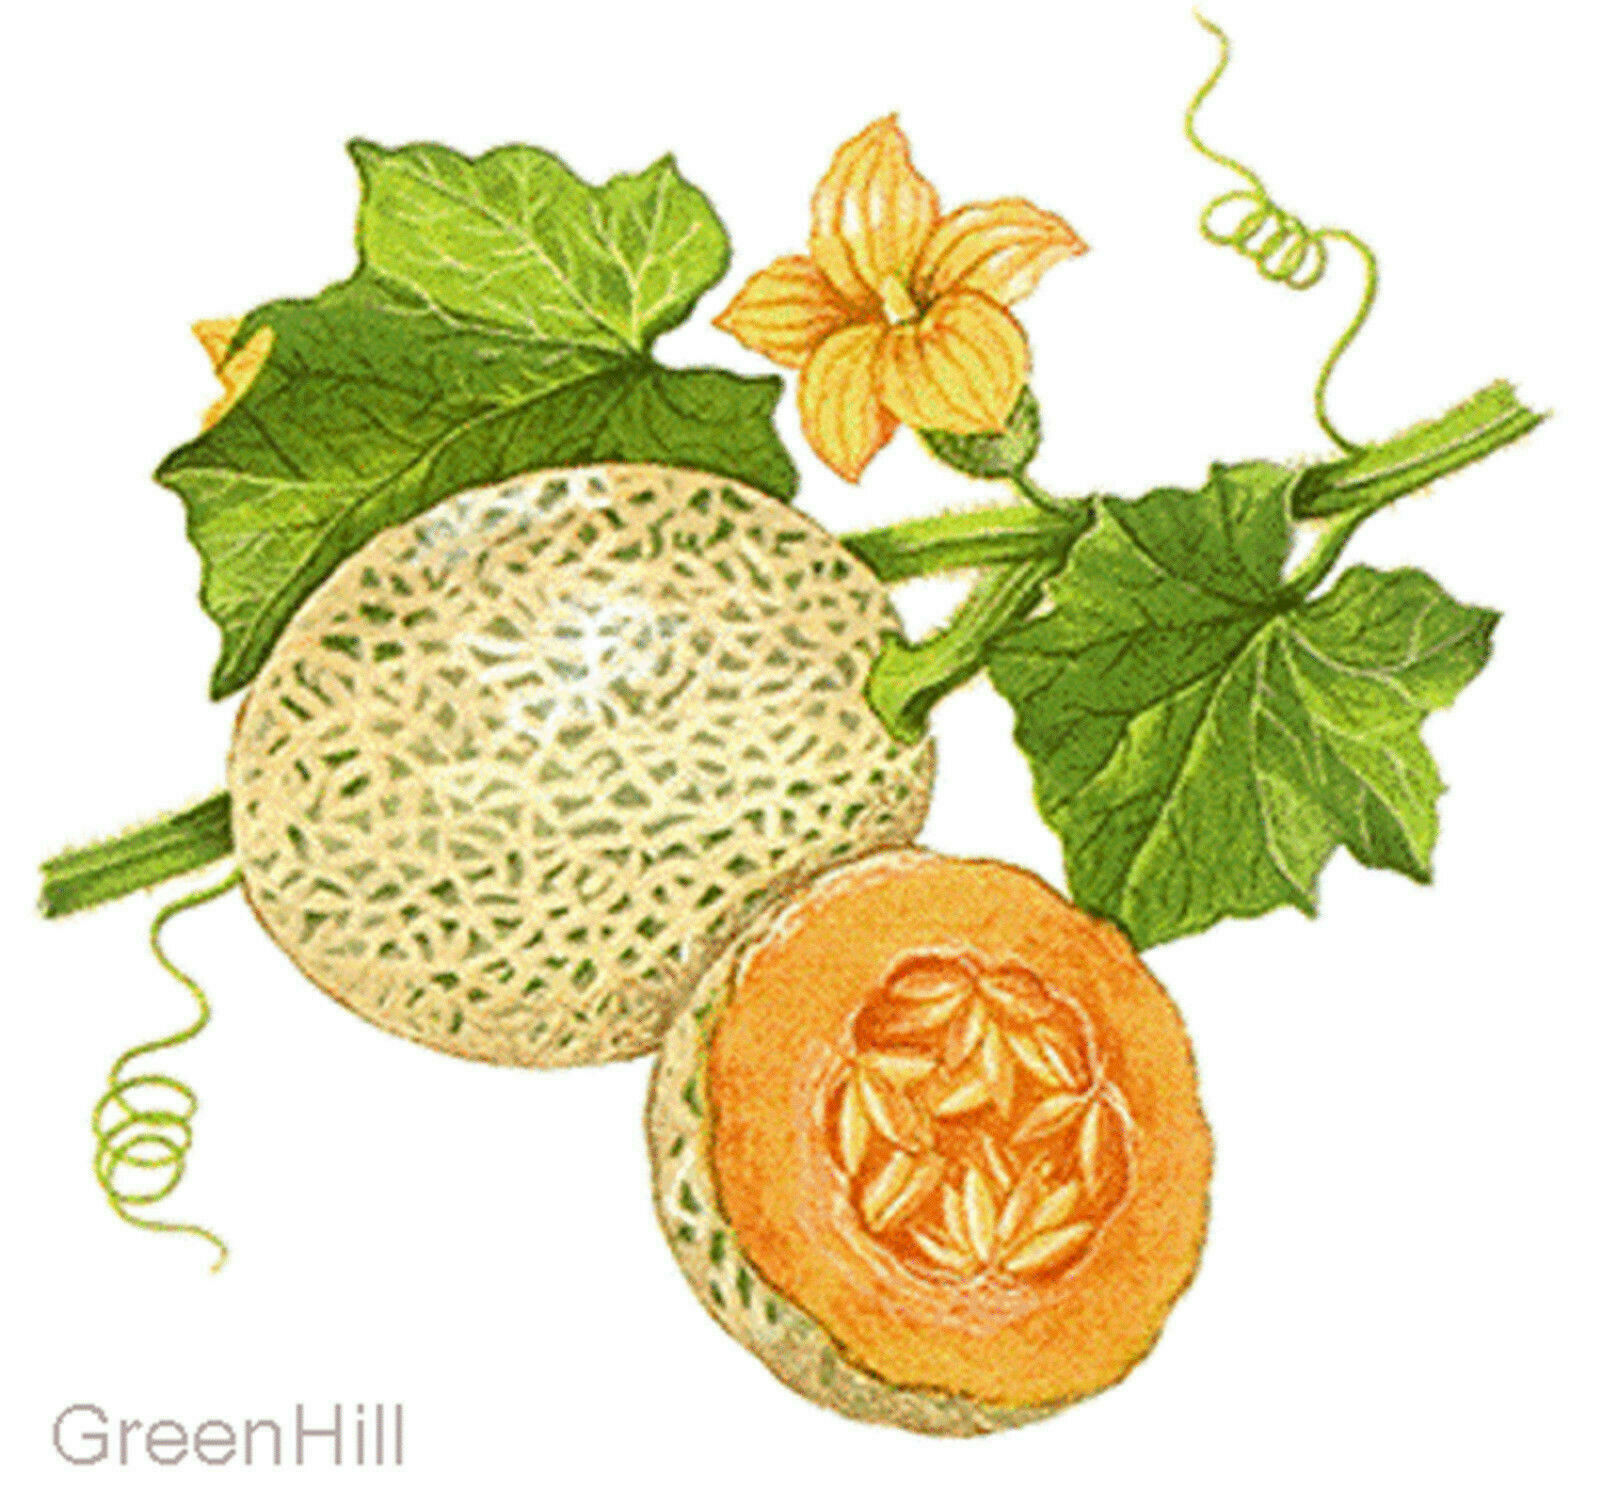 Cantaloupe Melon, Muskmelon Sweet Fruit Plant -10 Seeds - Rich i